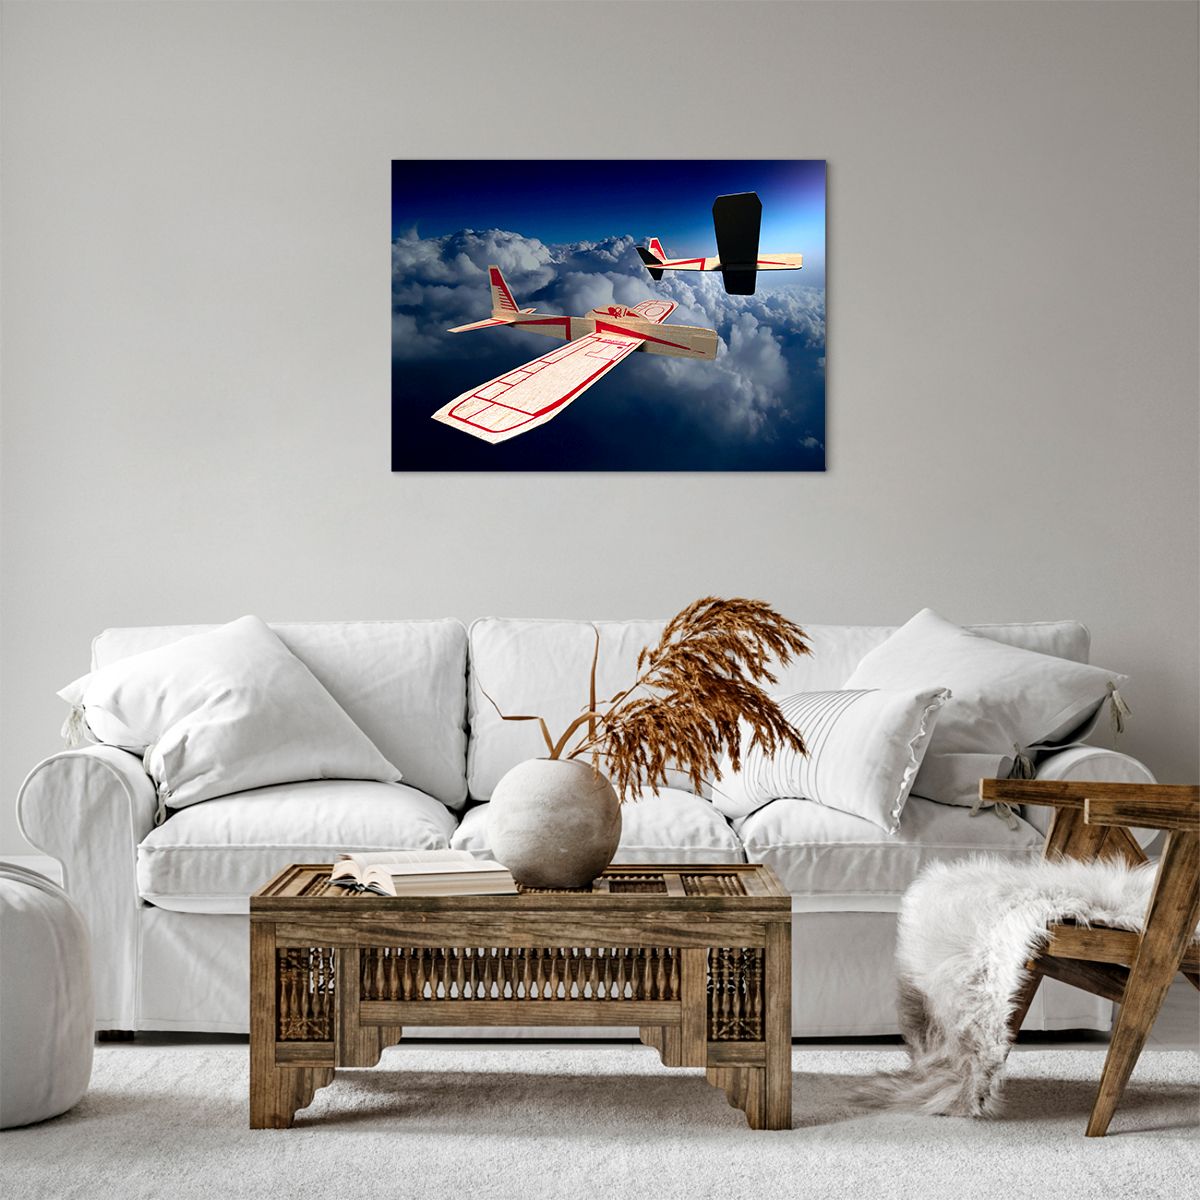 Bild auf Leinwand Ebene, Bild auf Leinwand Segelflugzeug, Bild auf Leinwand Wolken, Bild auf Leinwand Flugzeug, Bild auf Leinwand Abstraktion